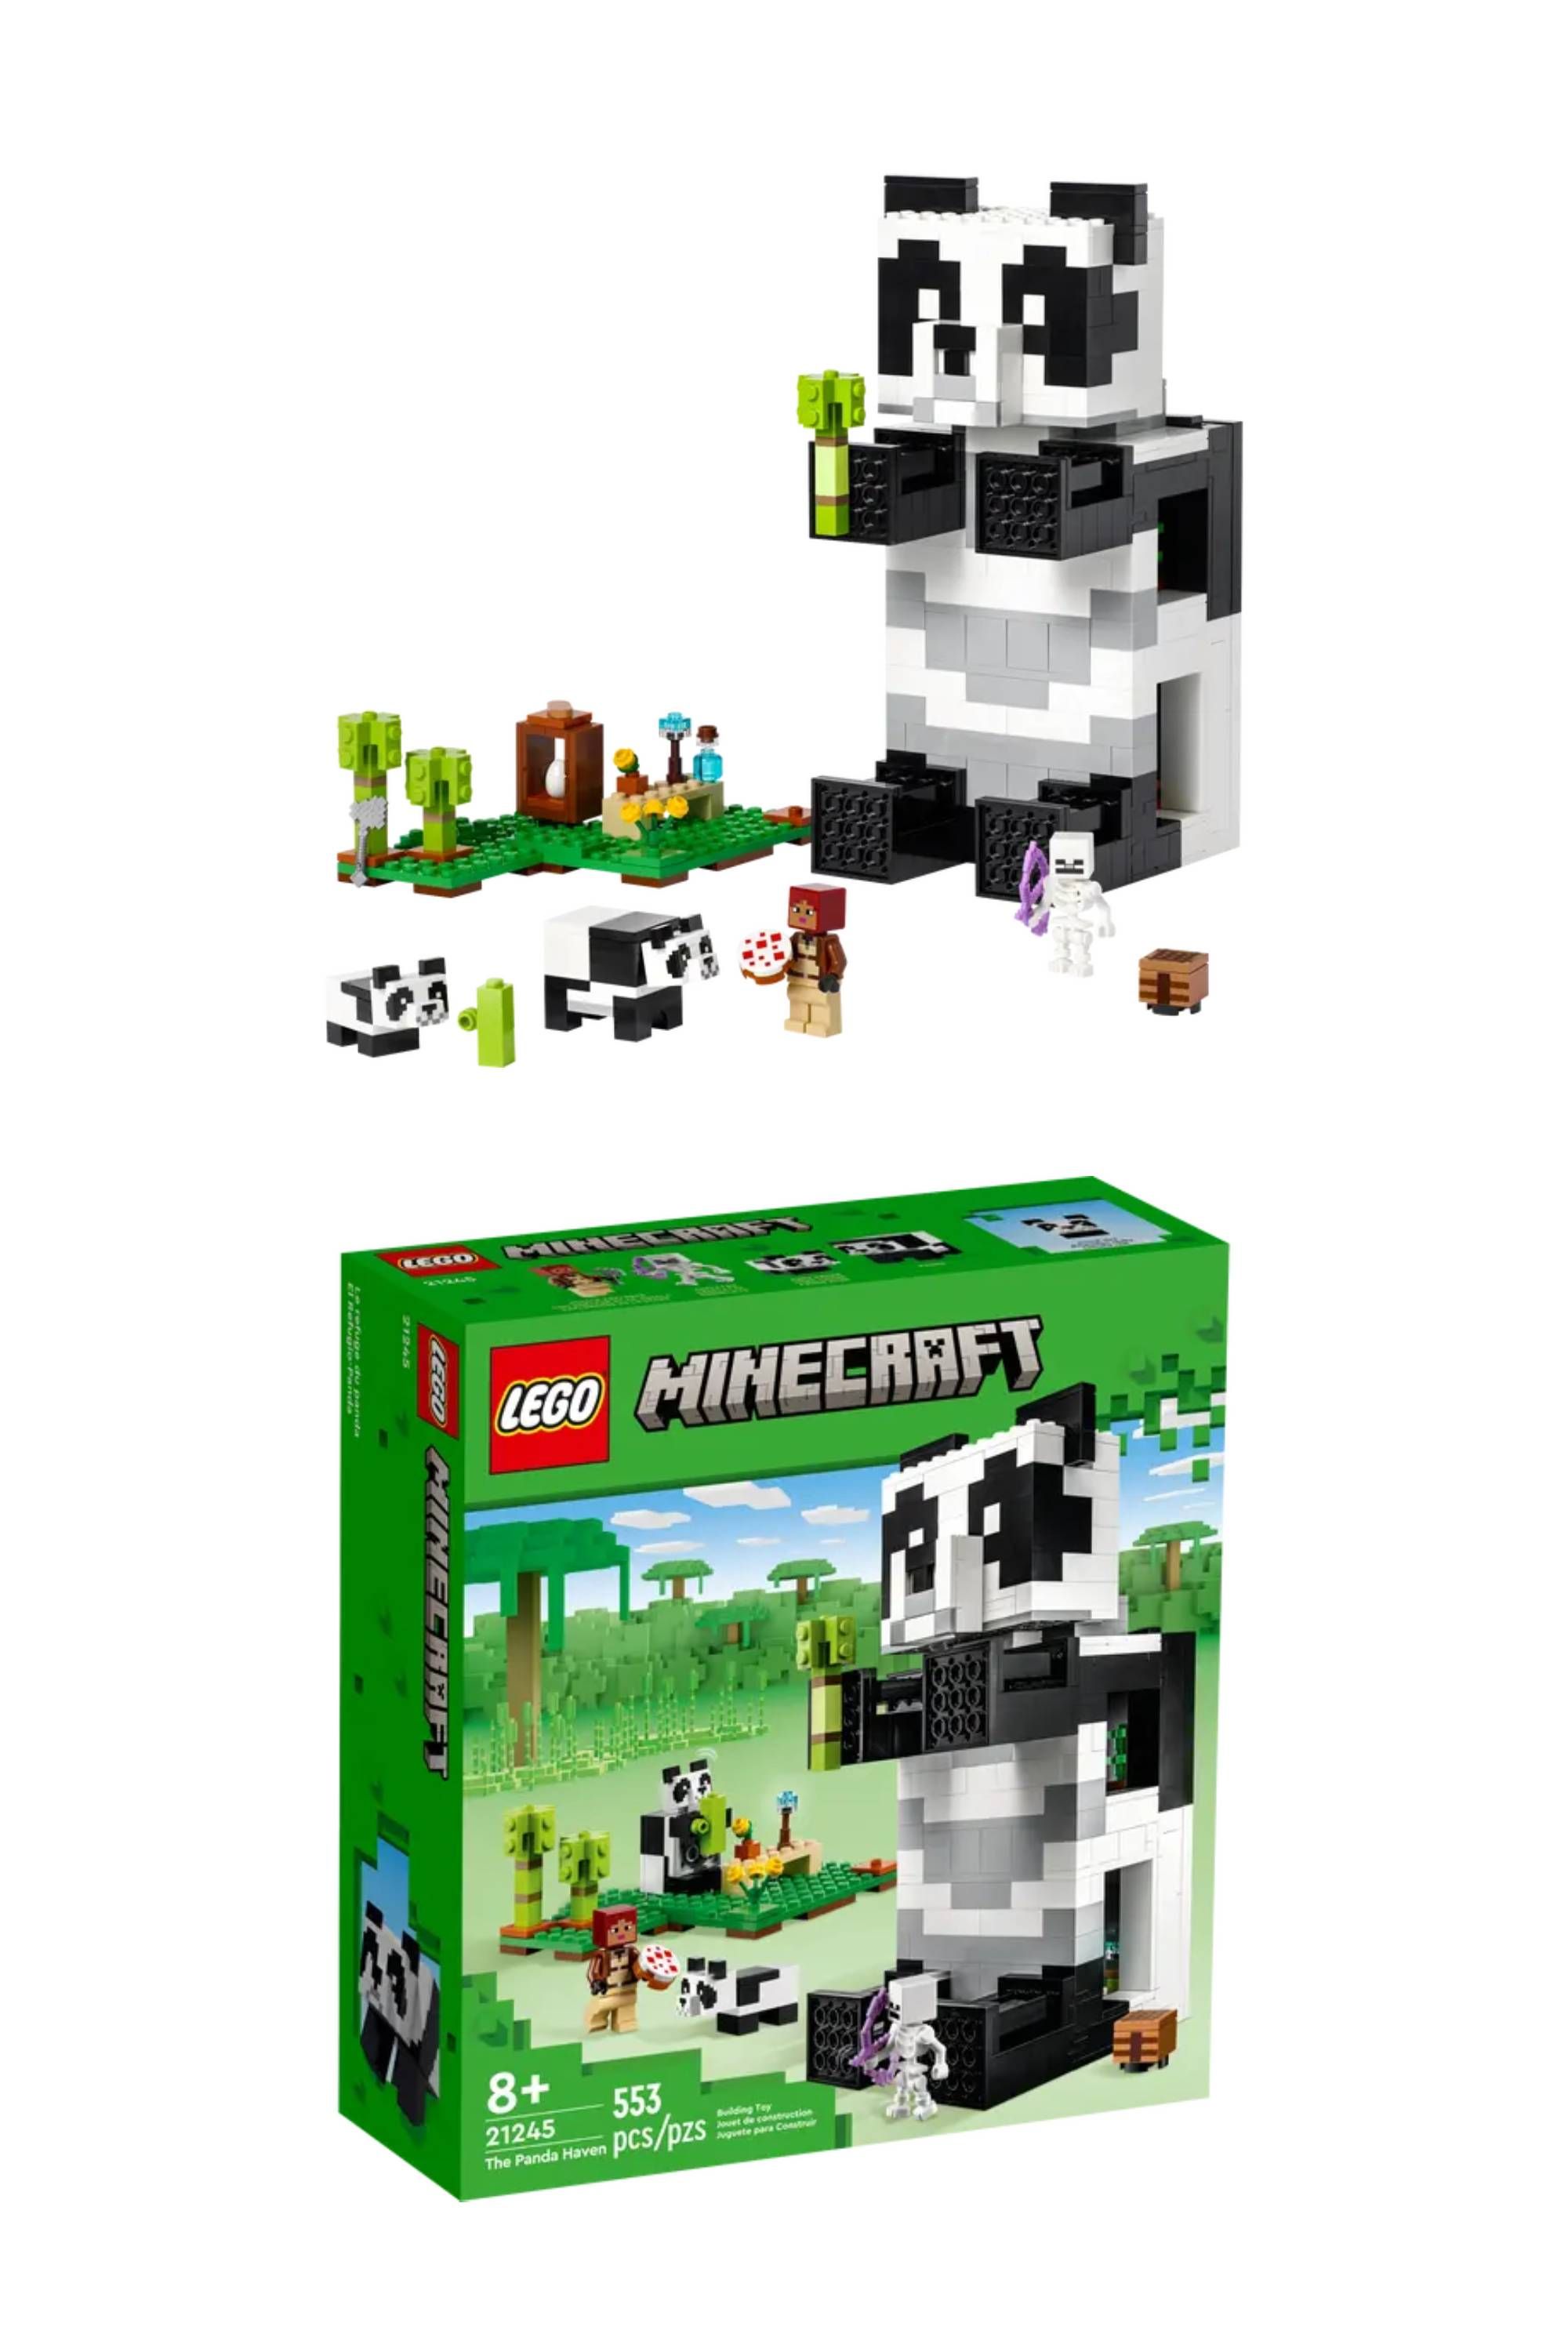 LEGO Minecraft - The Panda Haven